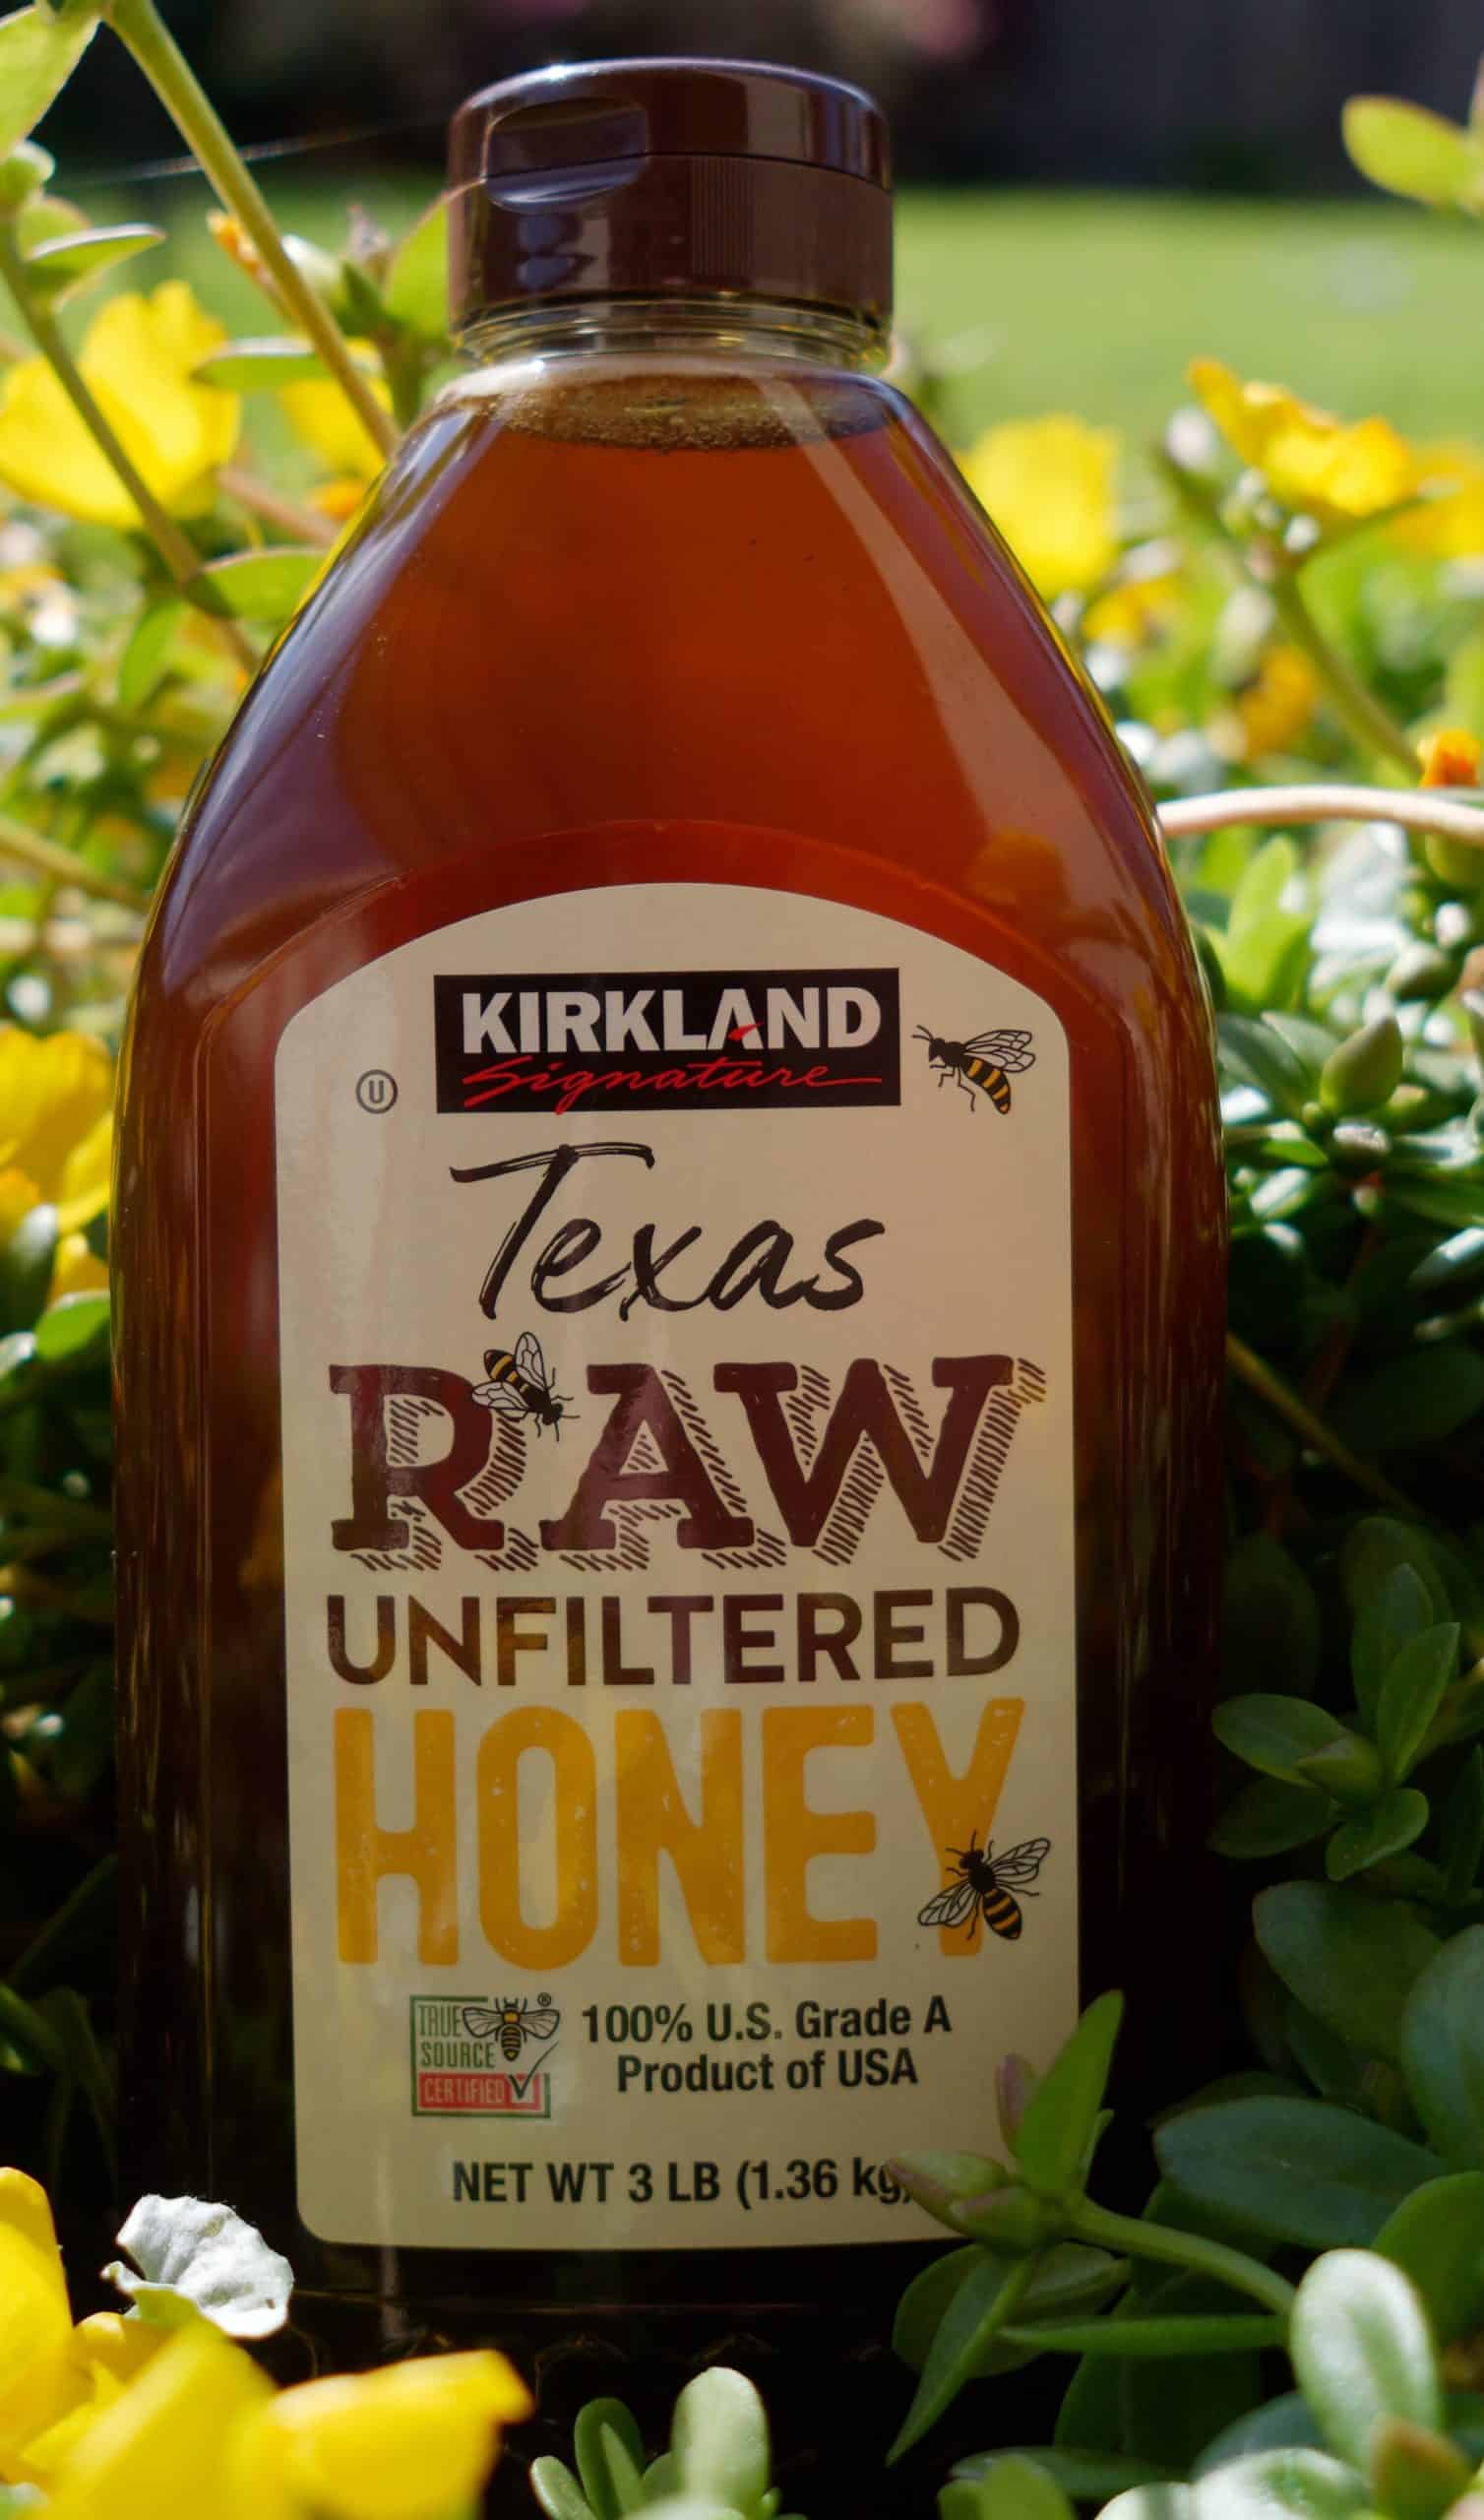 Kirkland Texas Raw Unfiltered Honey Review